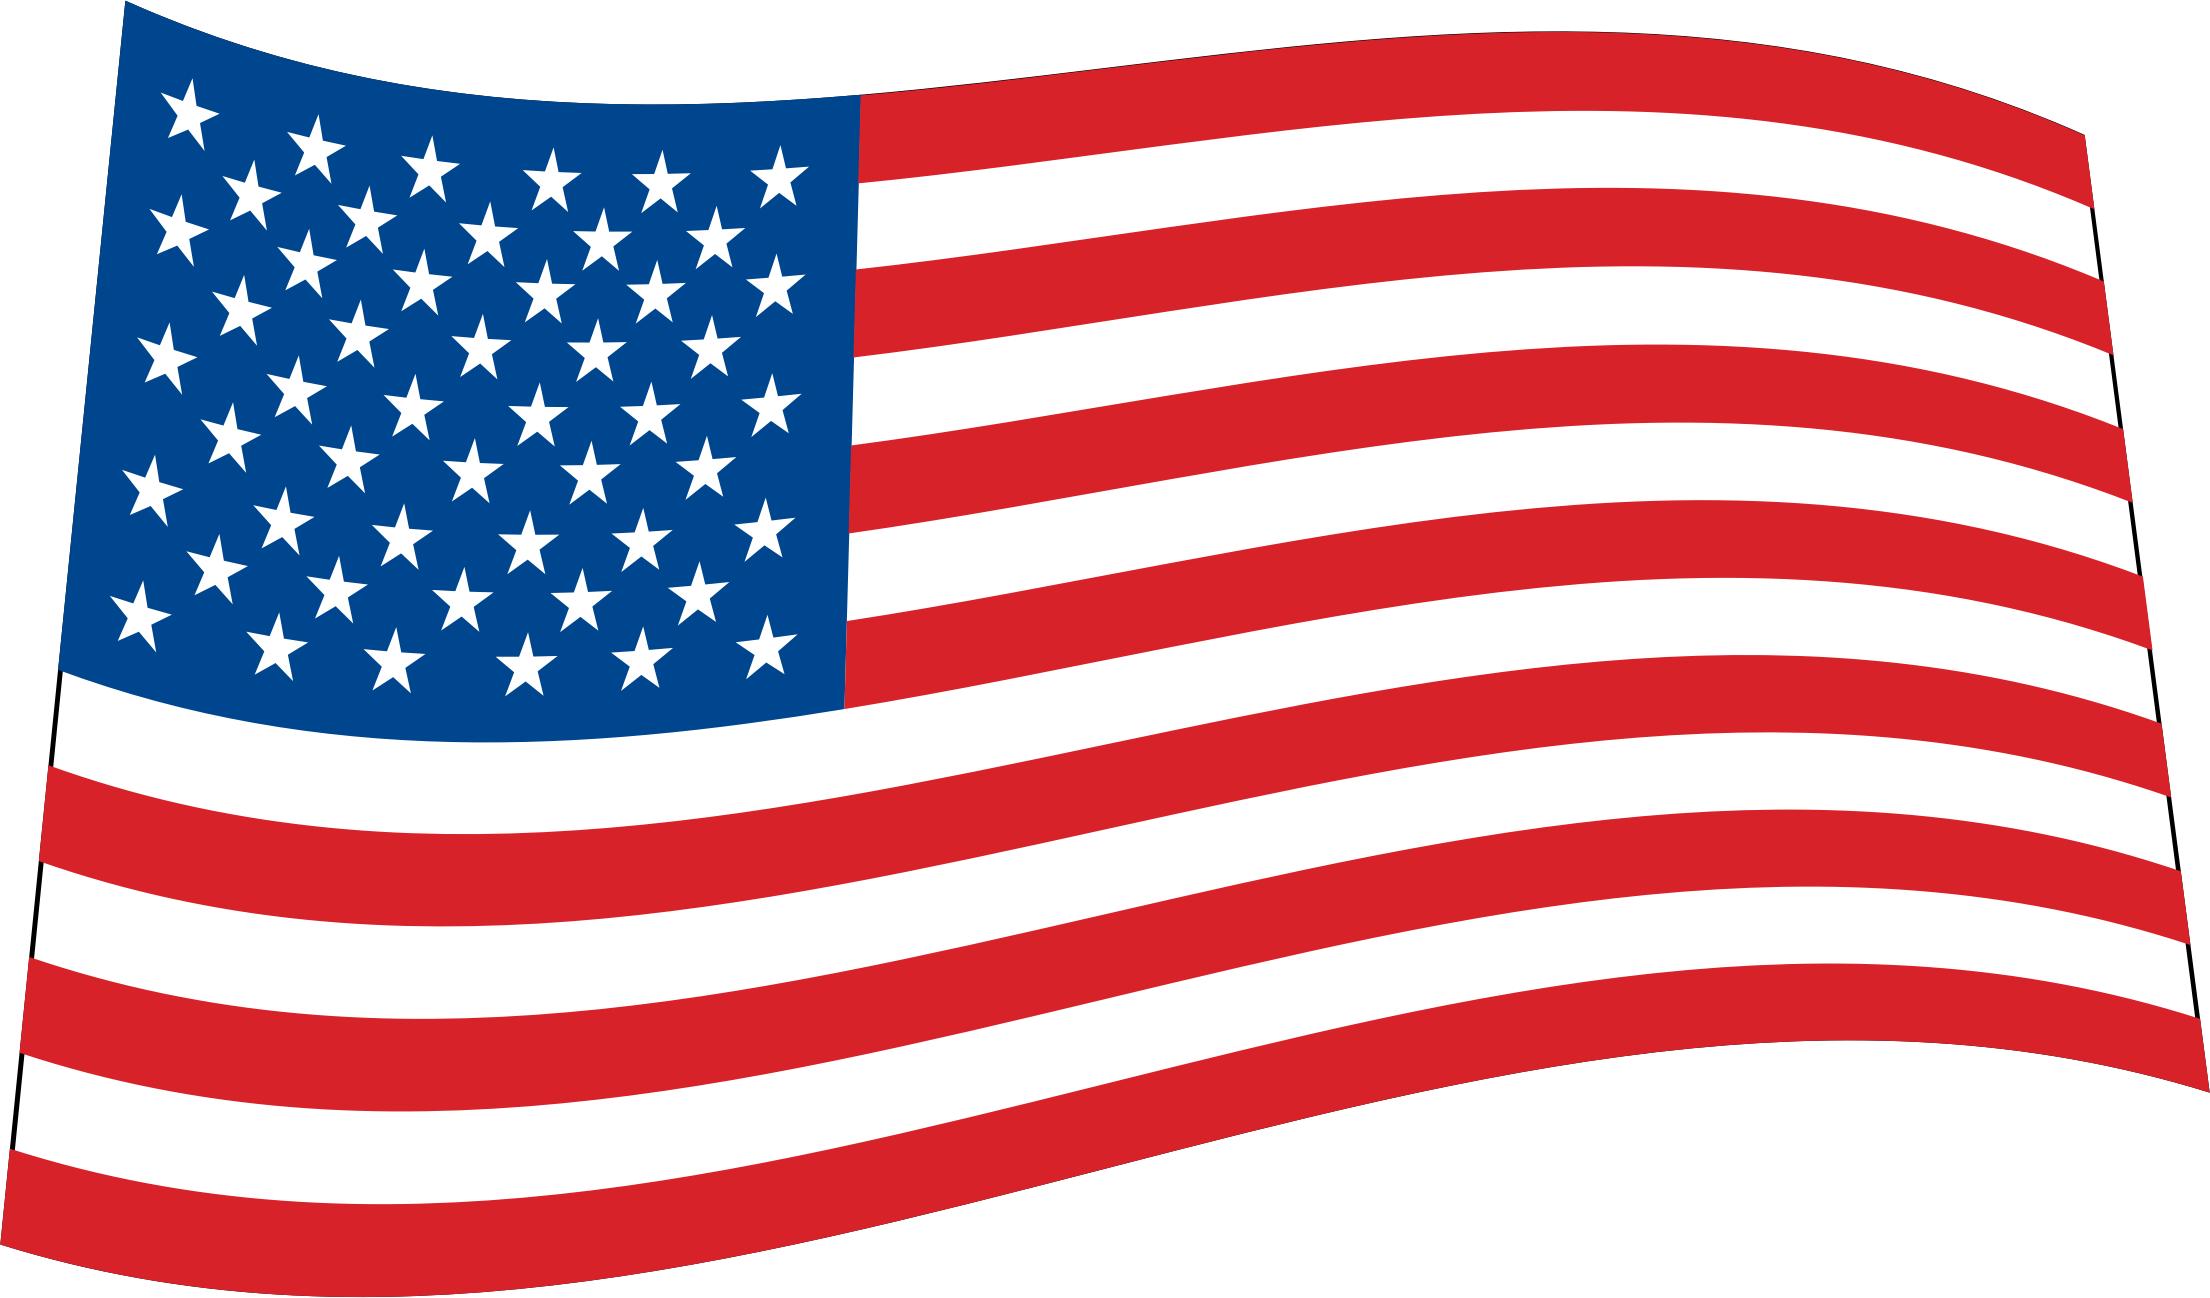 U.S.A. Flag icons